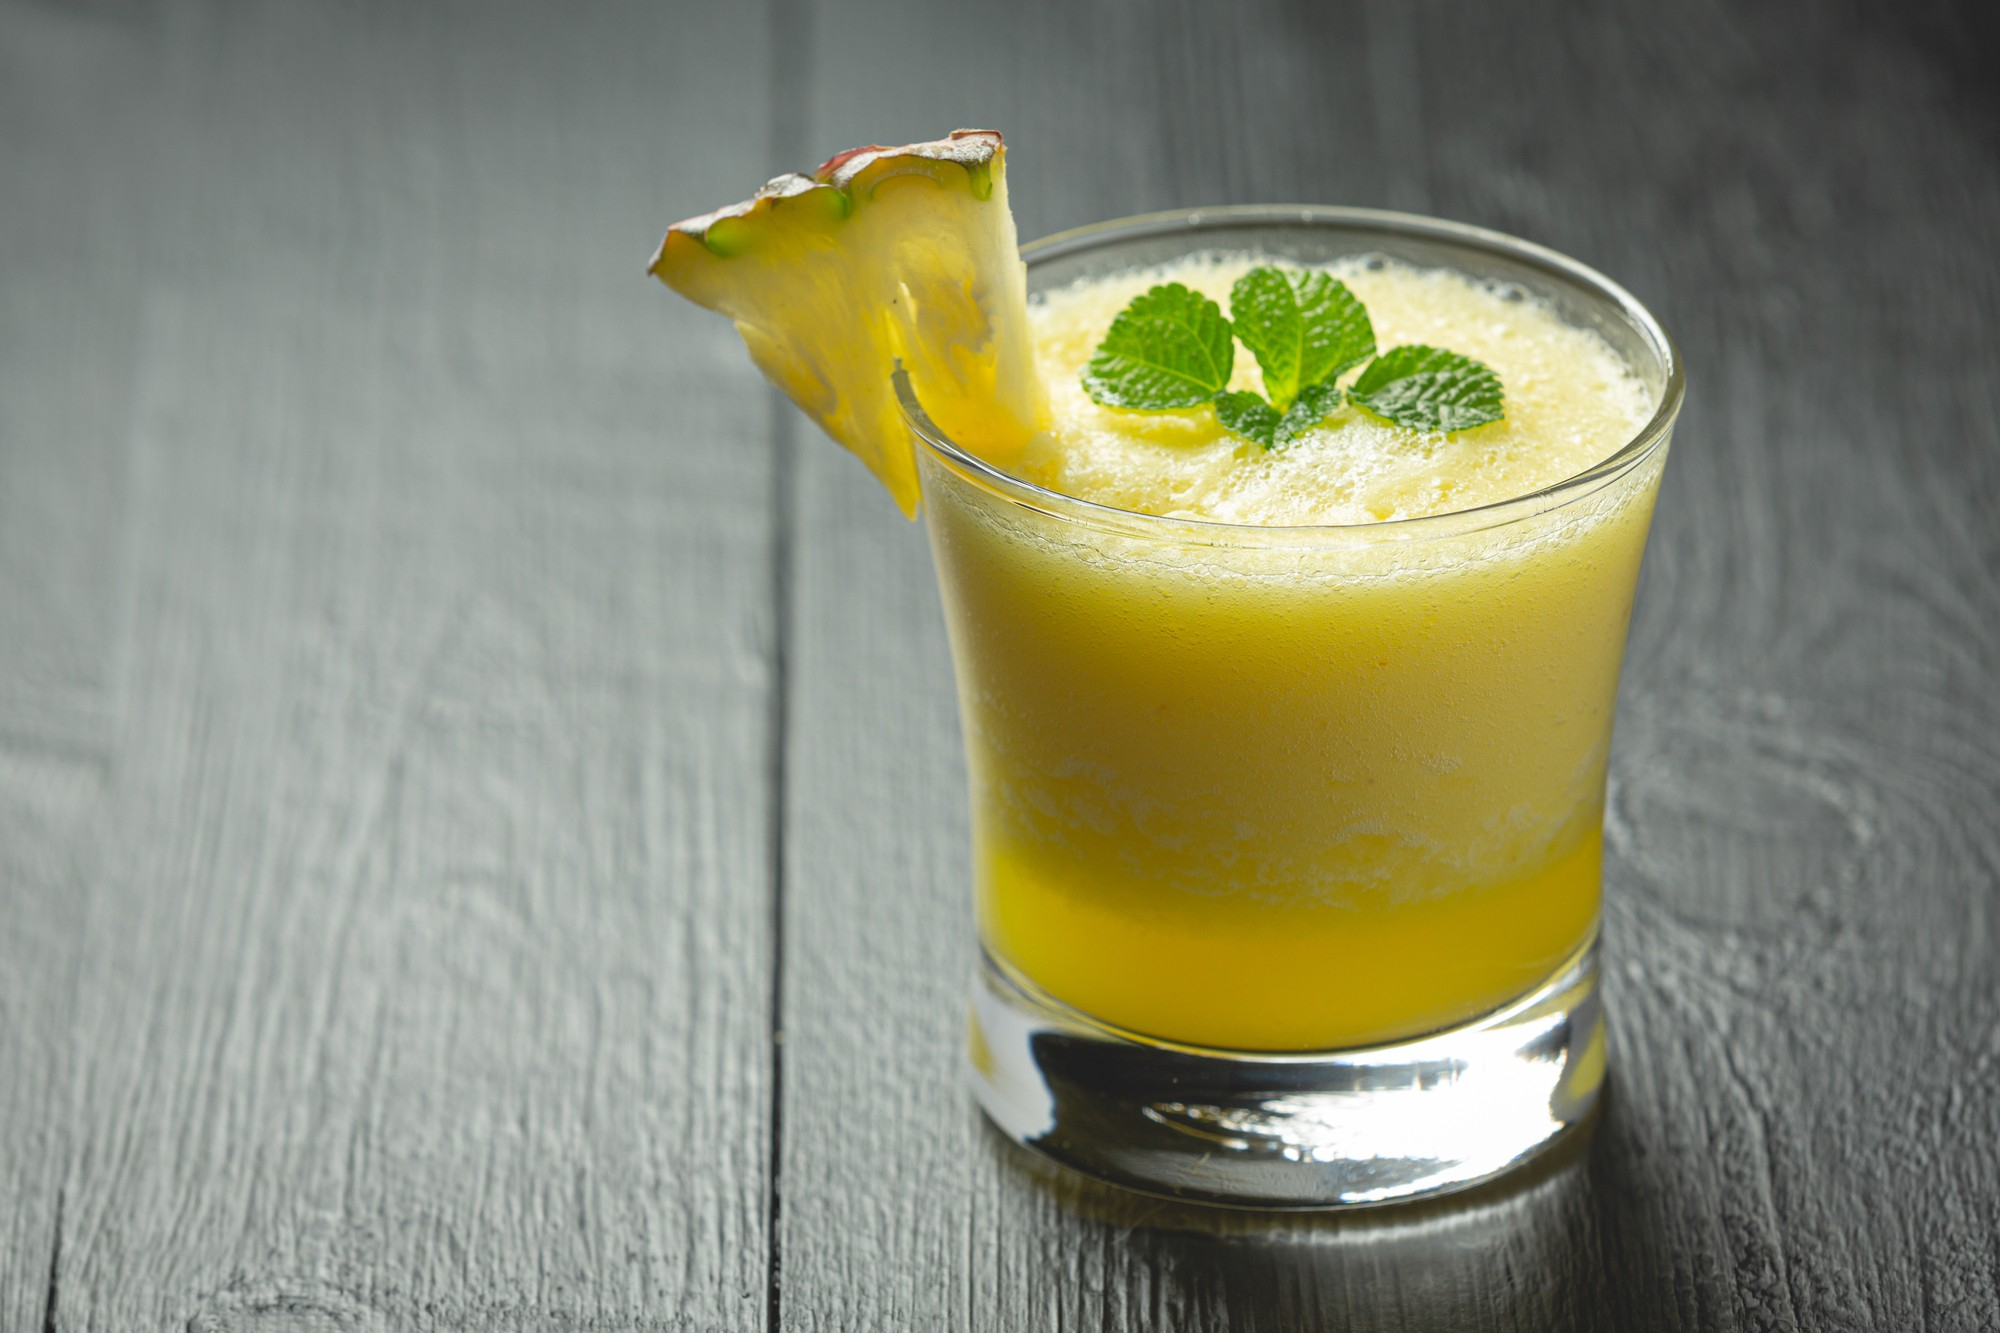 pineapple juice is healthy